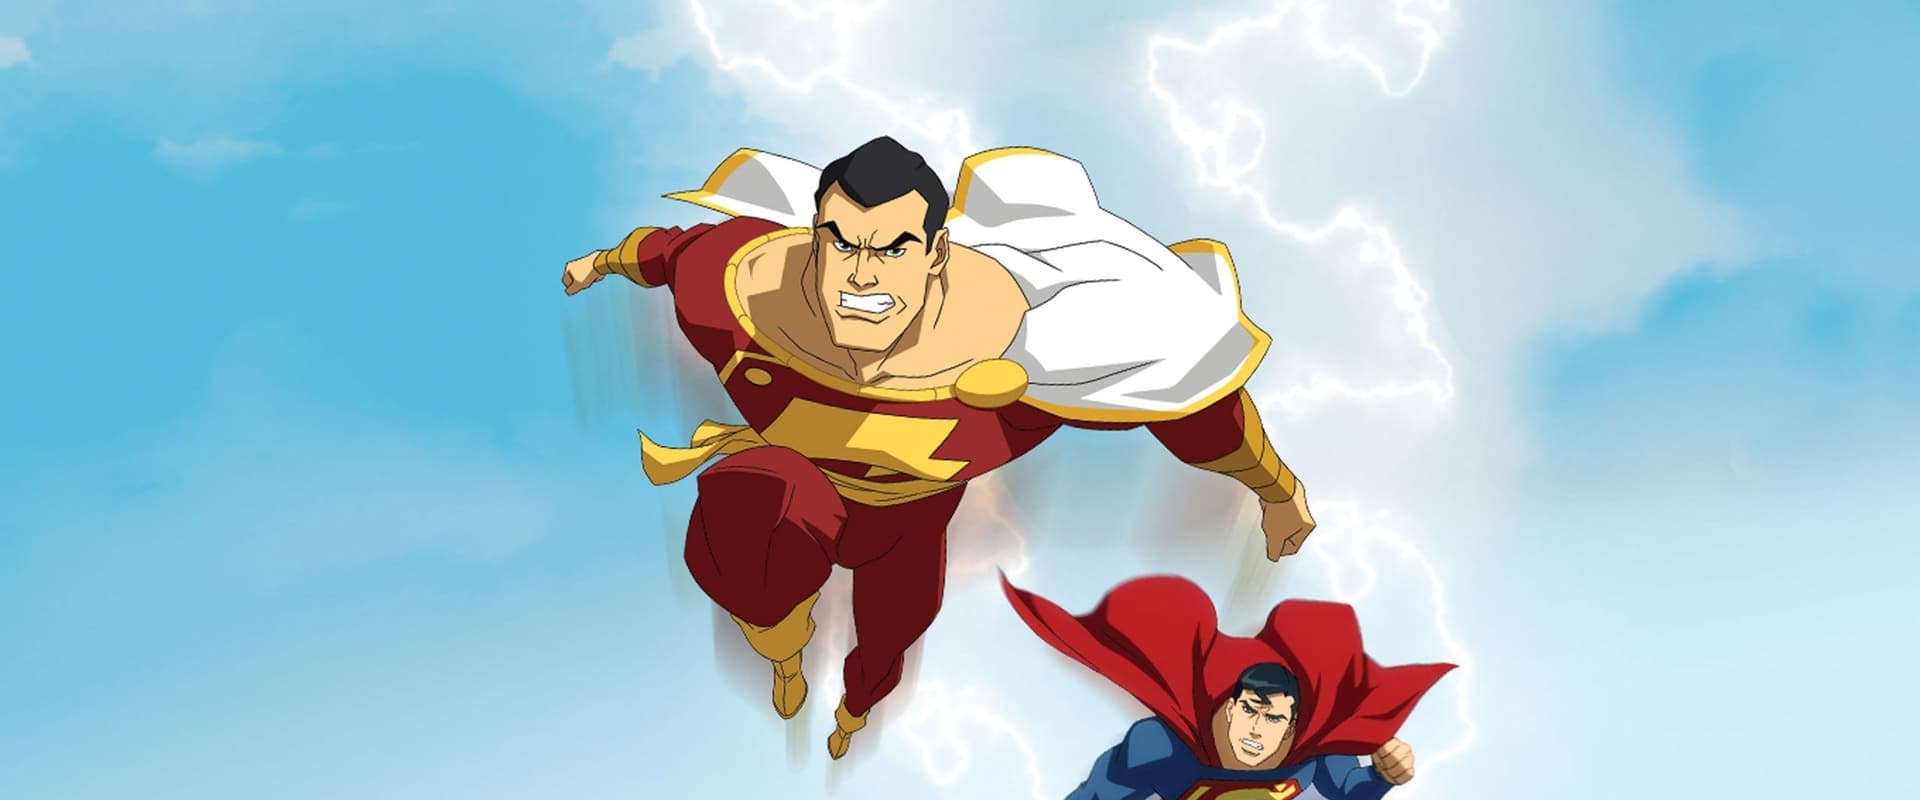 Superman/Shazam!: The Return of Black Adam